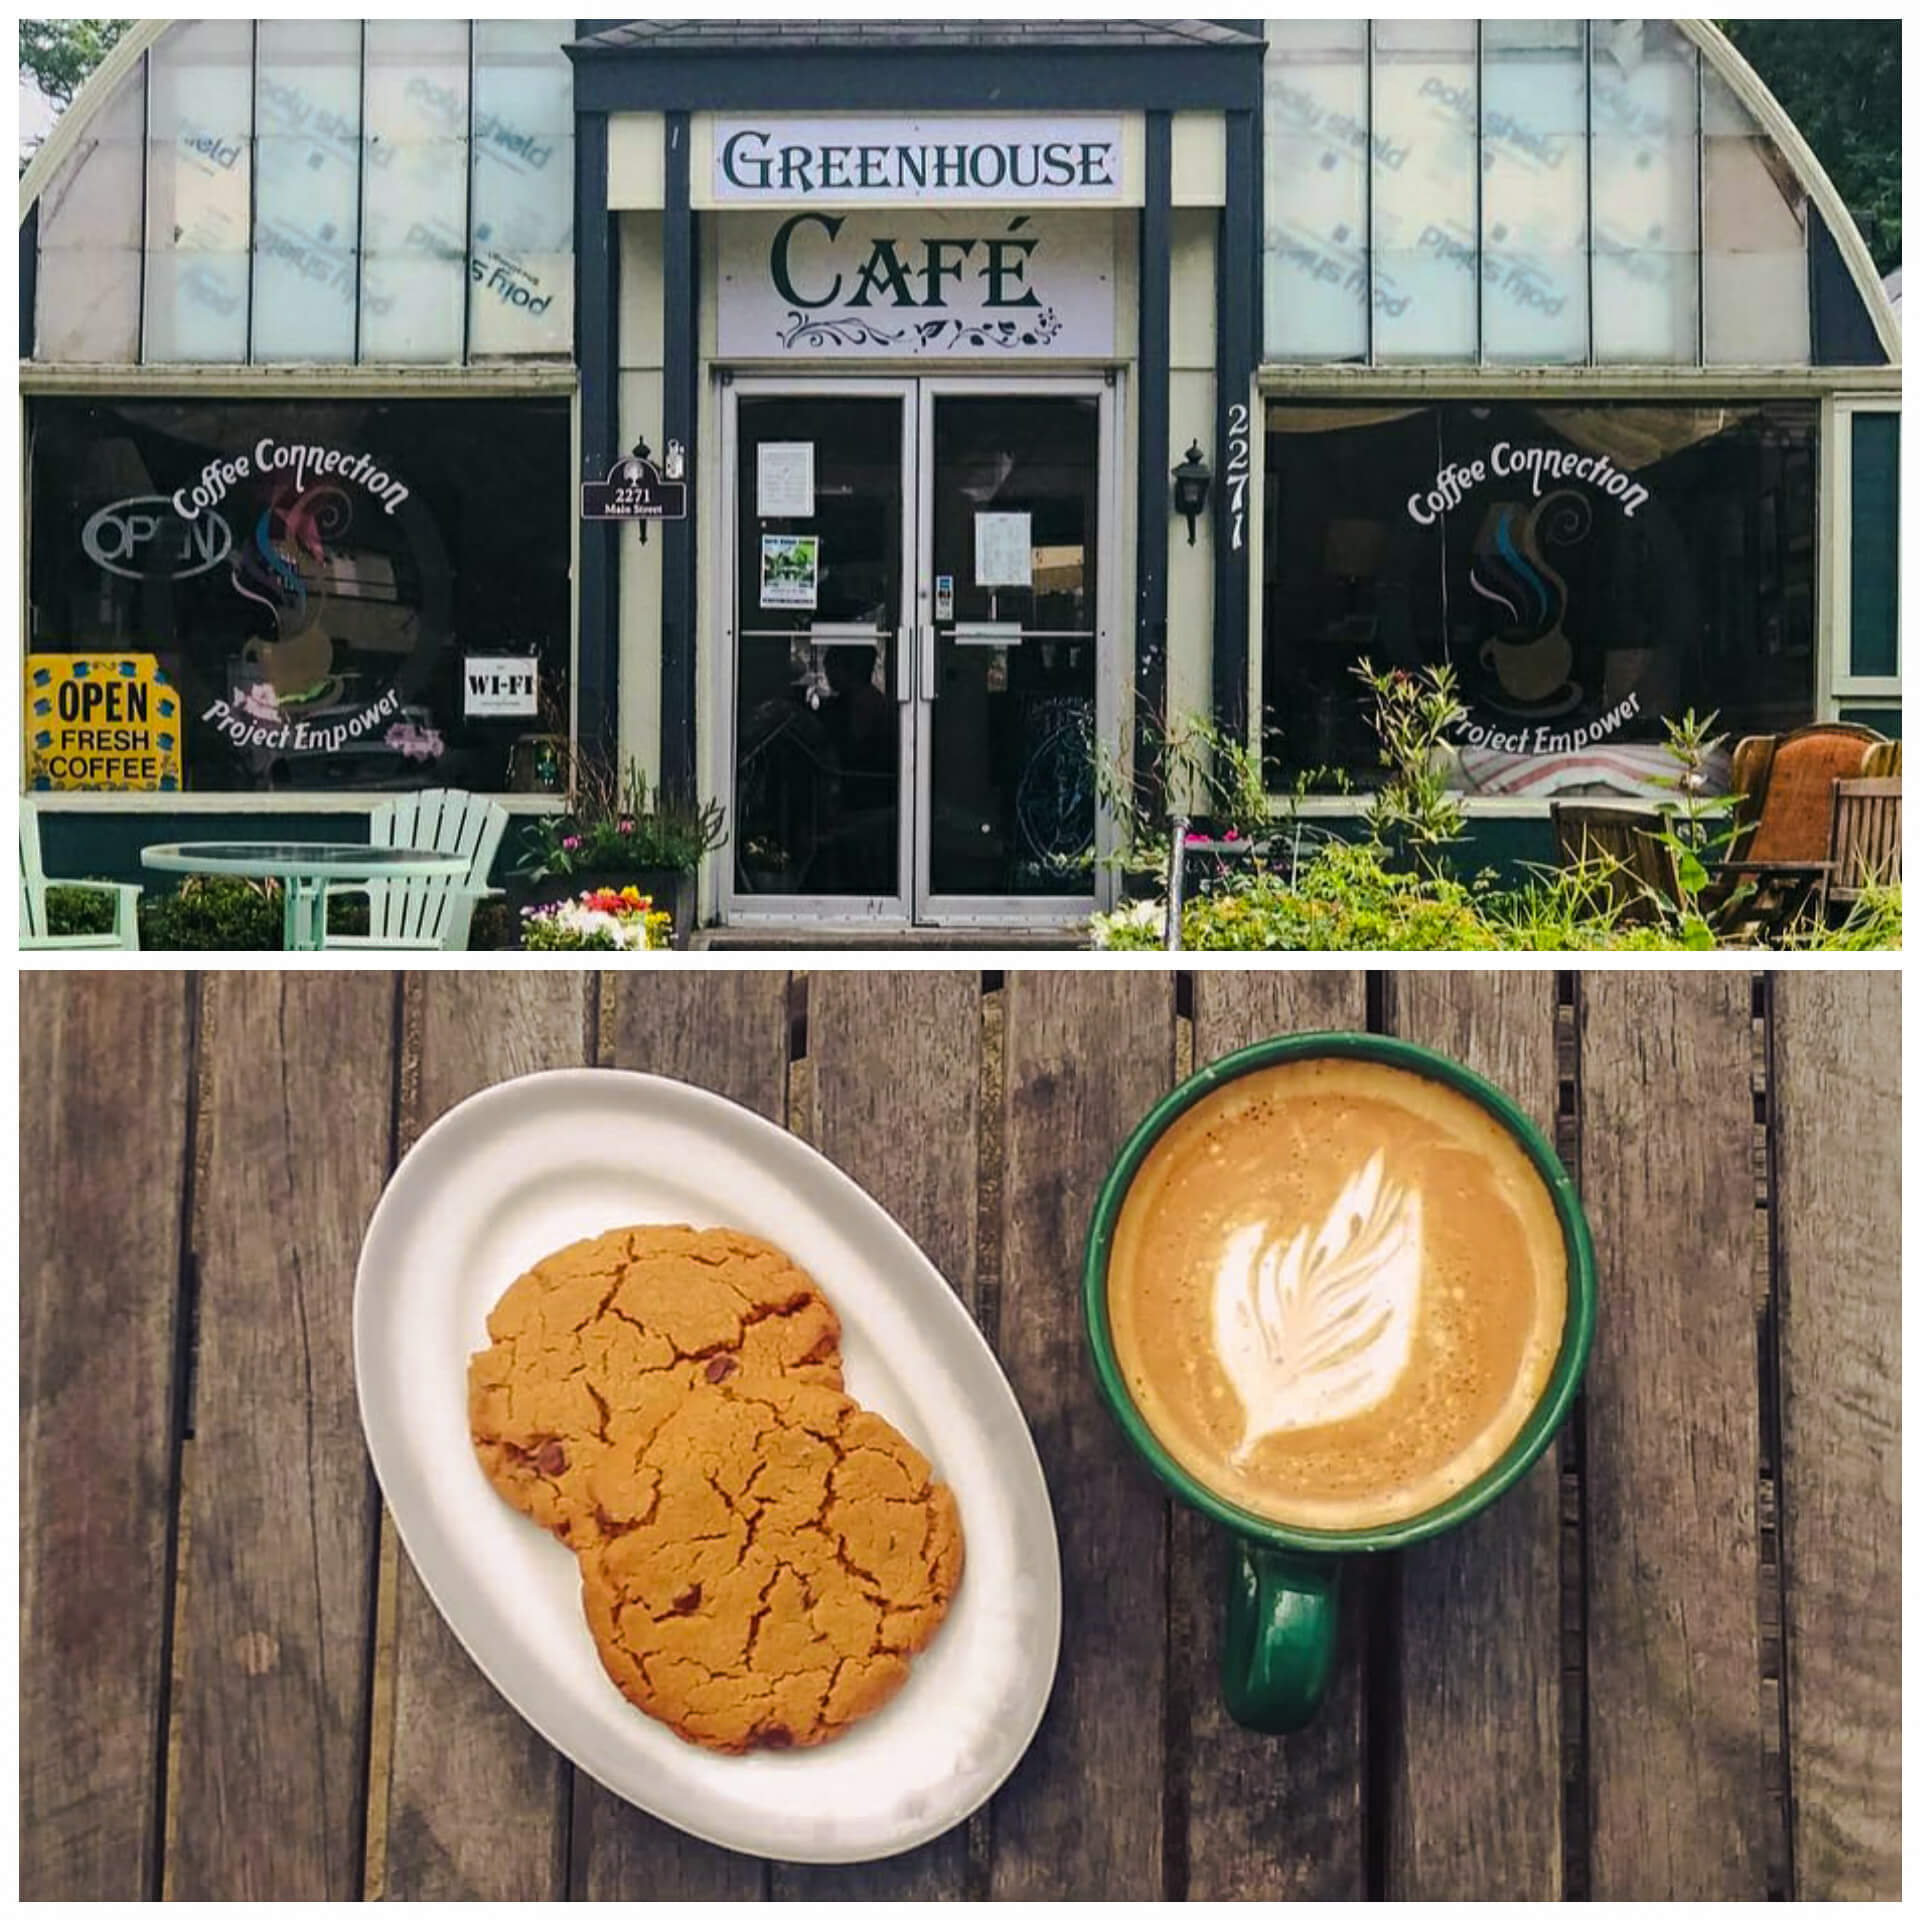 3 - Greenhouse latte cookie